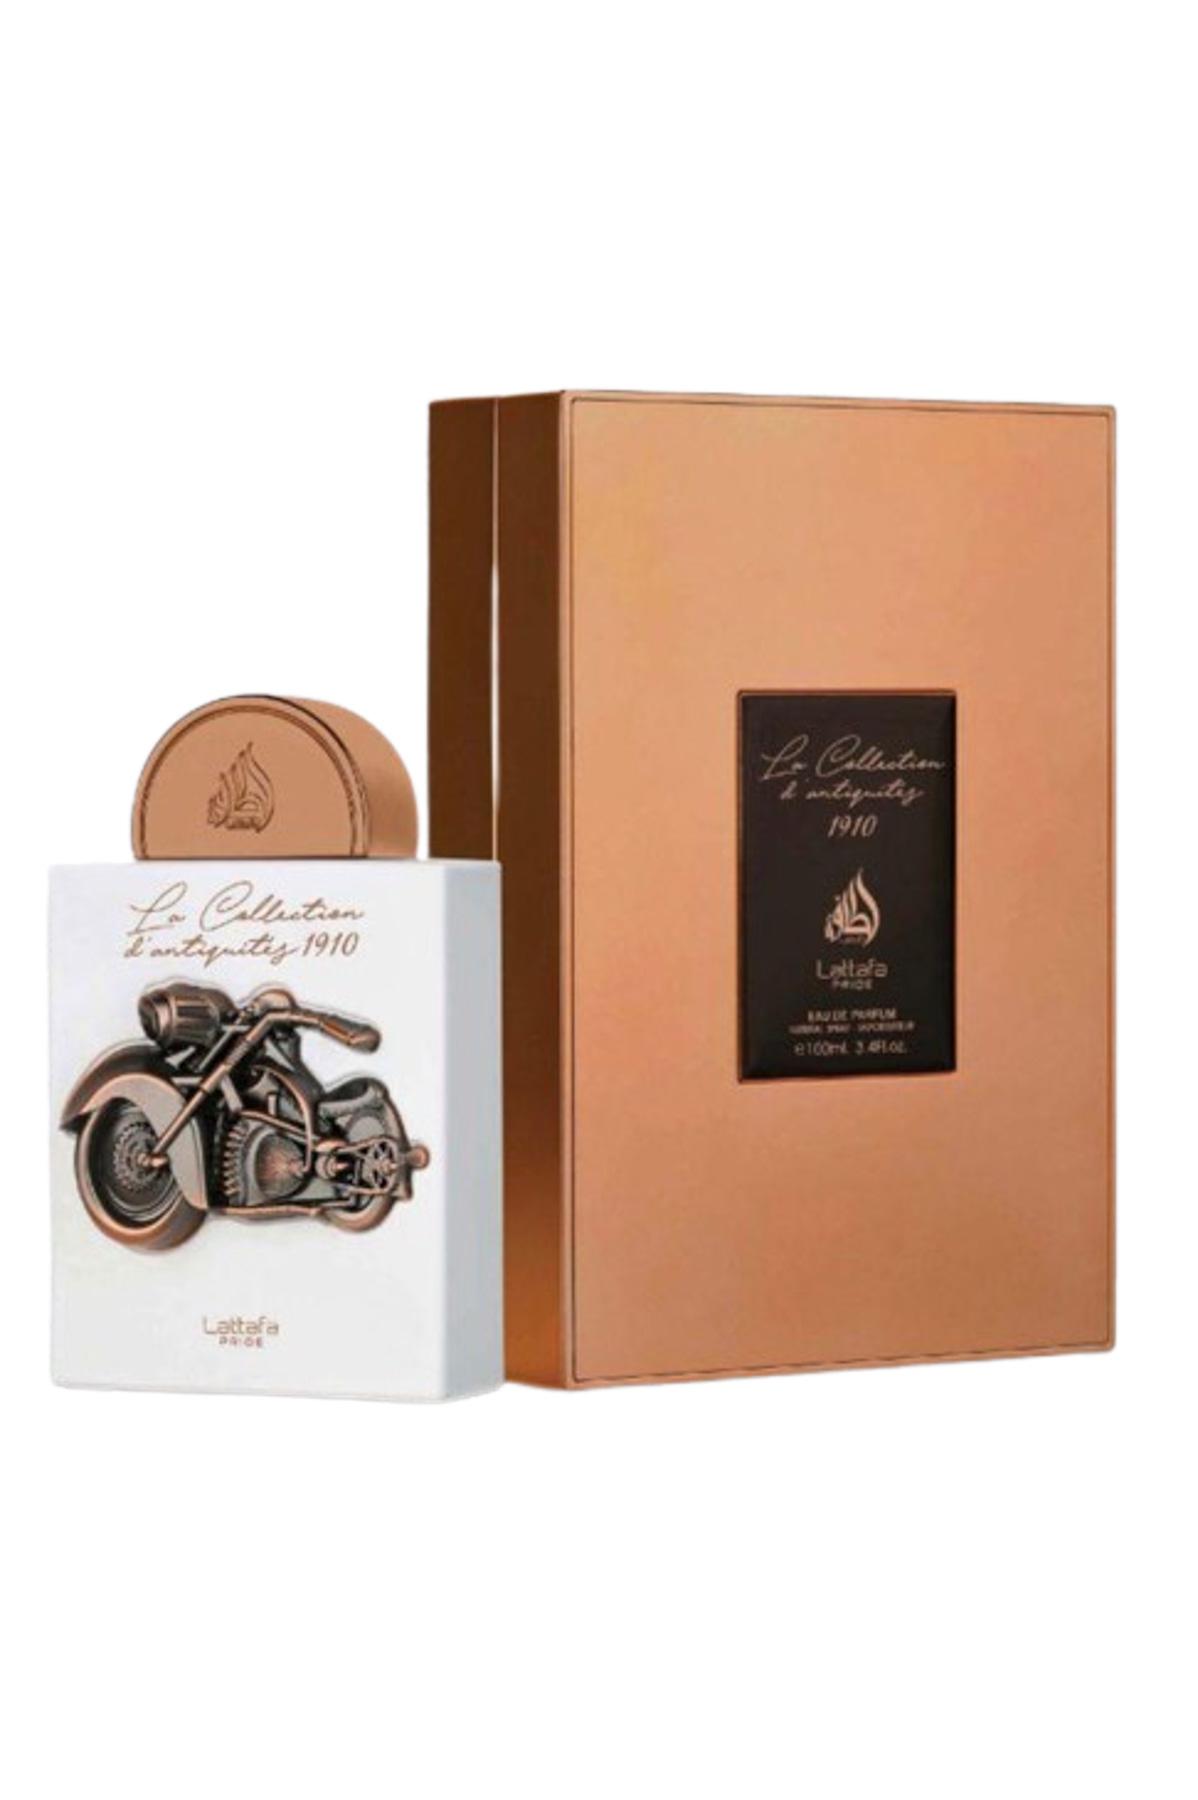 Man perfume Lifestyle Brown MAX LATAFFA LA COLLECTION-1910 #c Efashion Paris